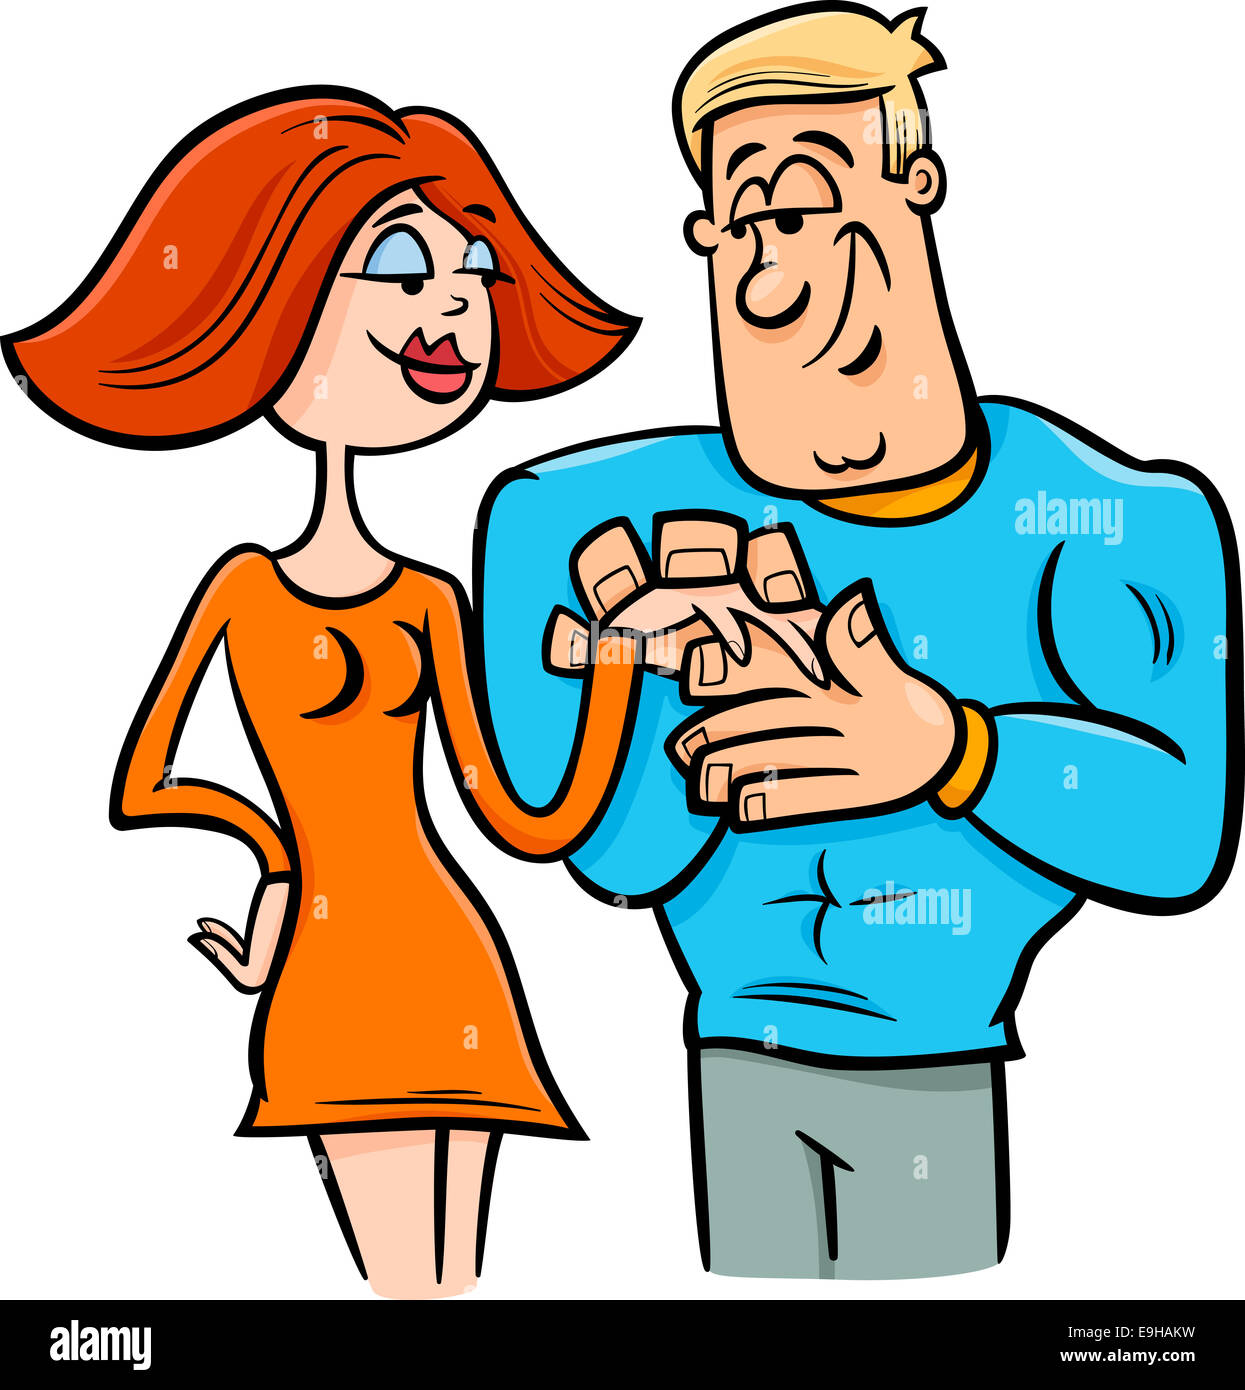 Cartoon Illustration of Funny Couple in Love Stock Photo - Alamy